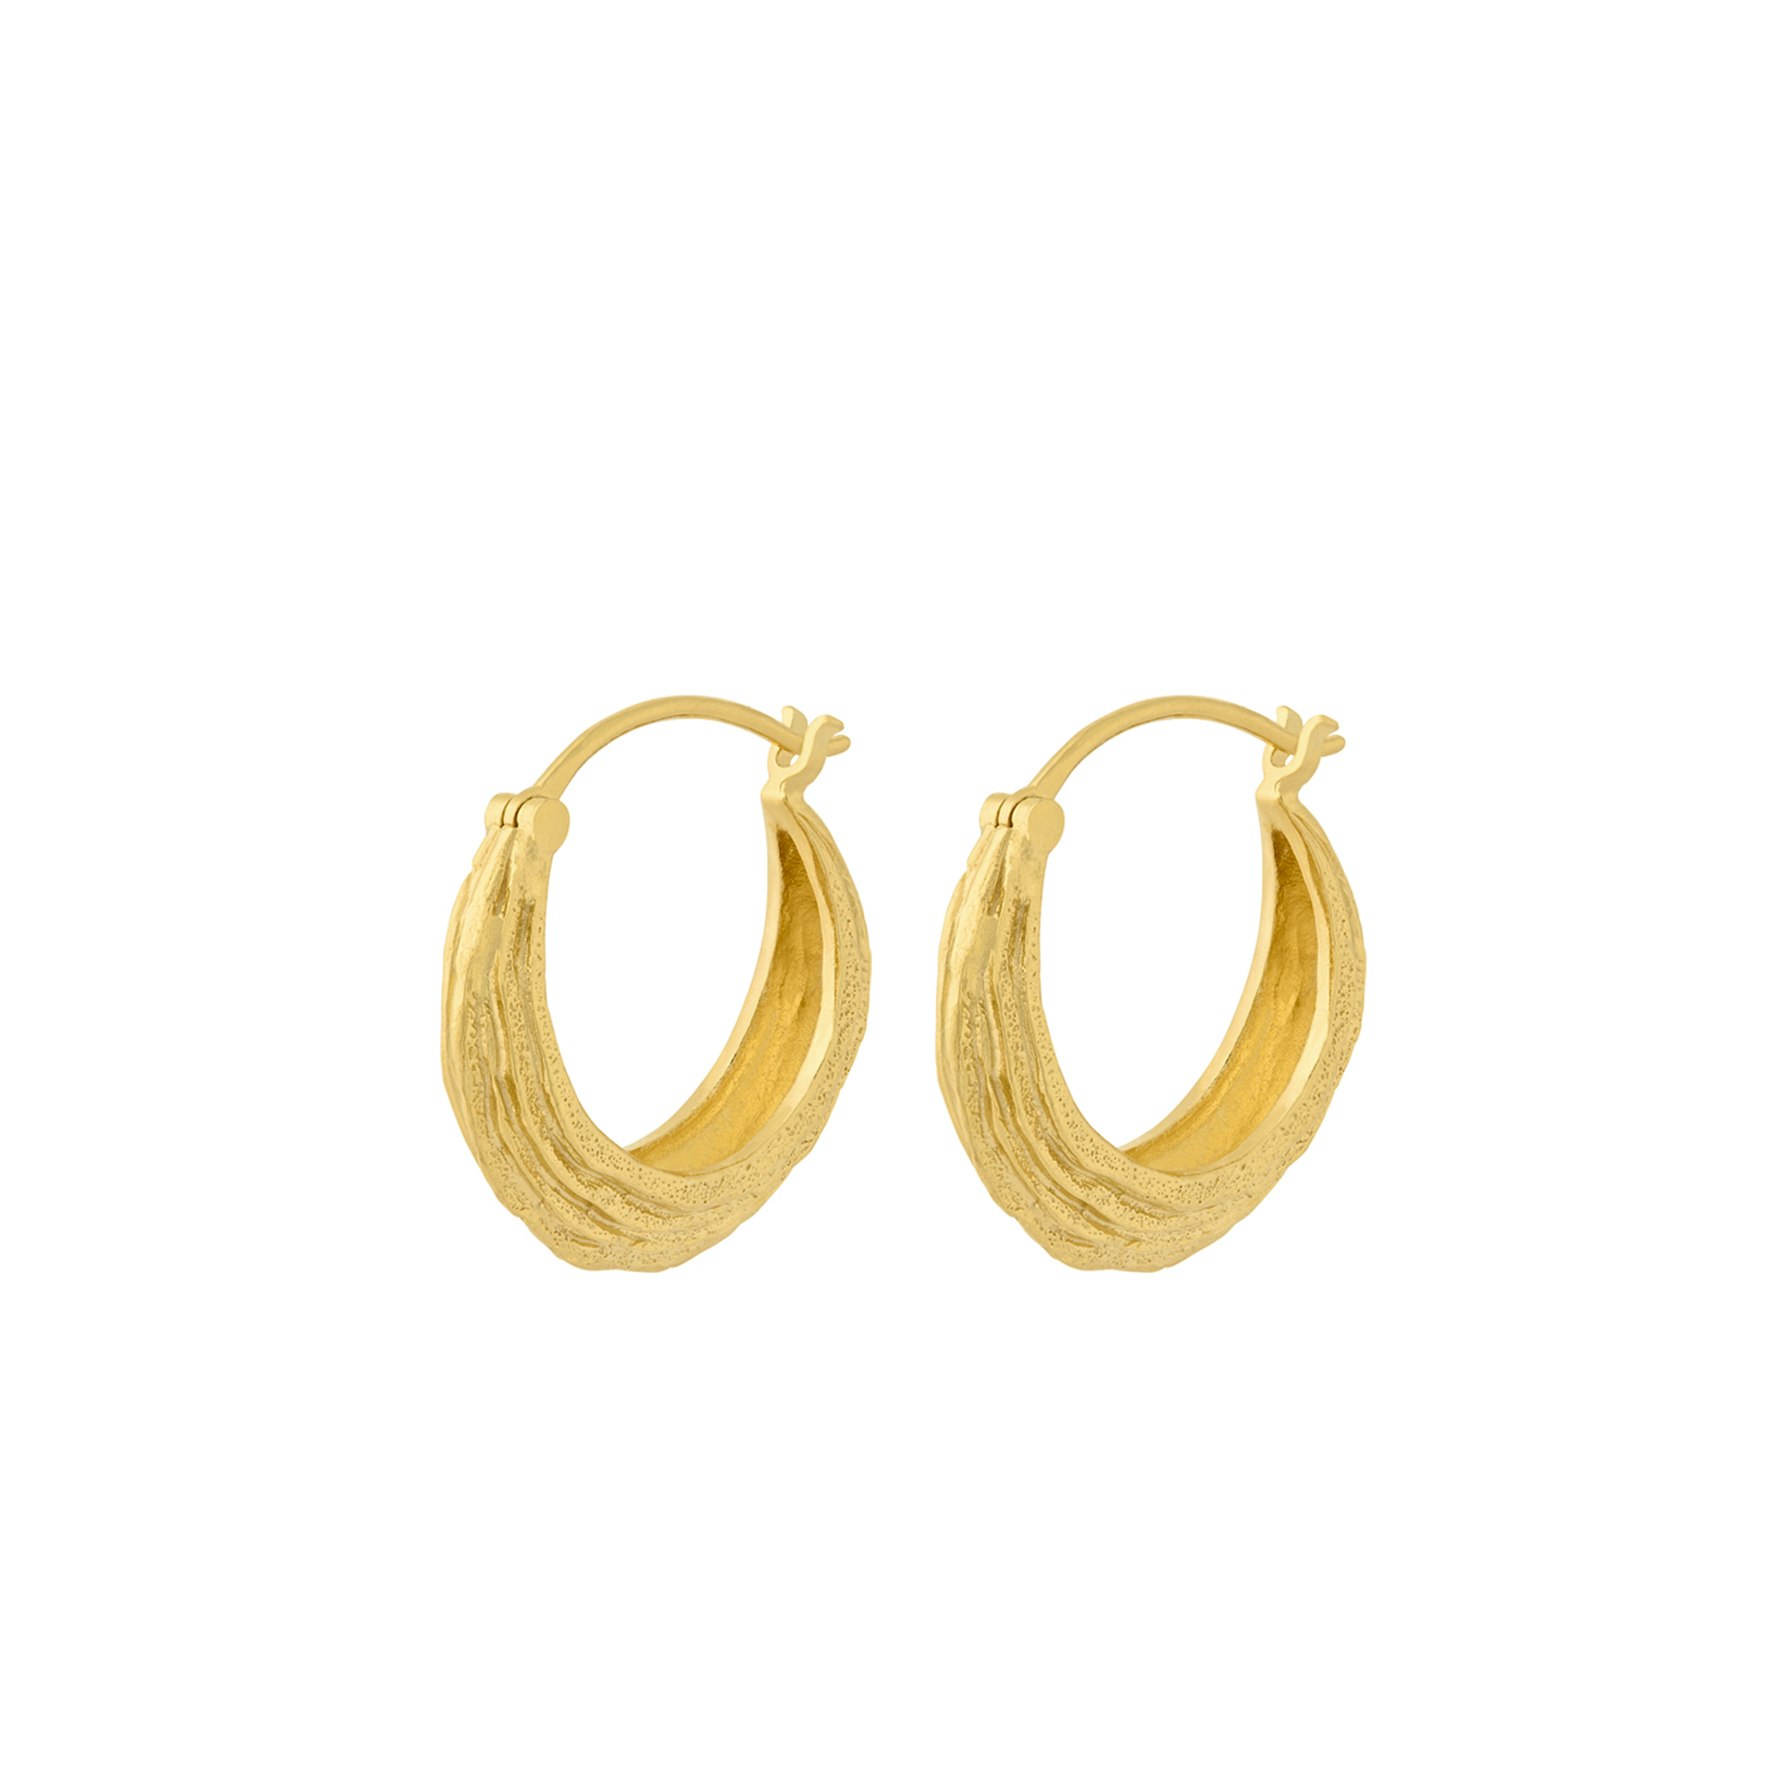 Coastline Earrings from Pernille Corydon in Goldplated-Silver Sterling 925